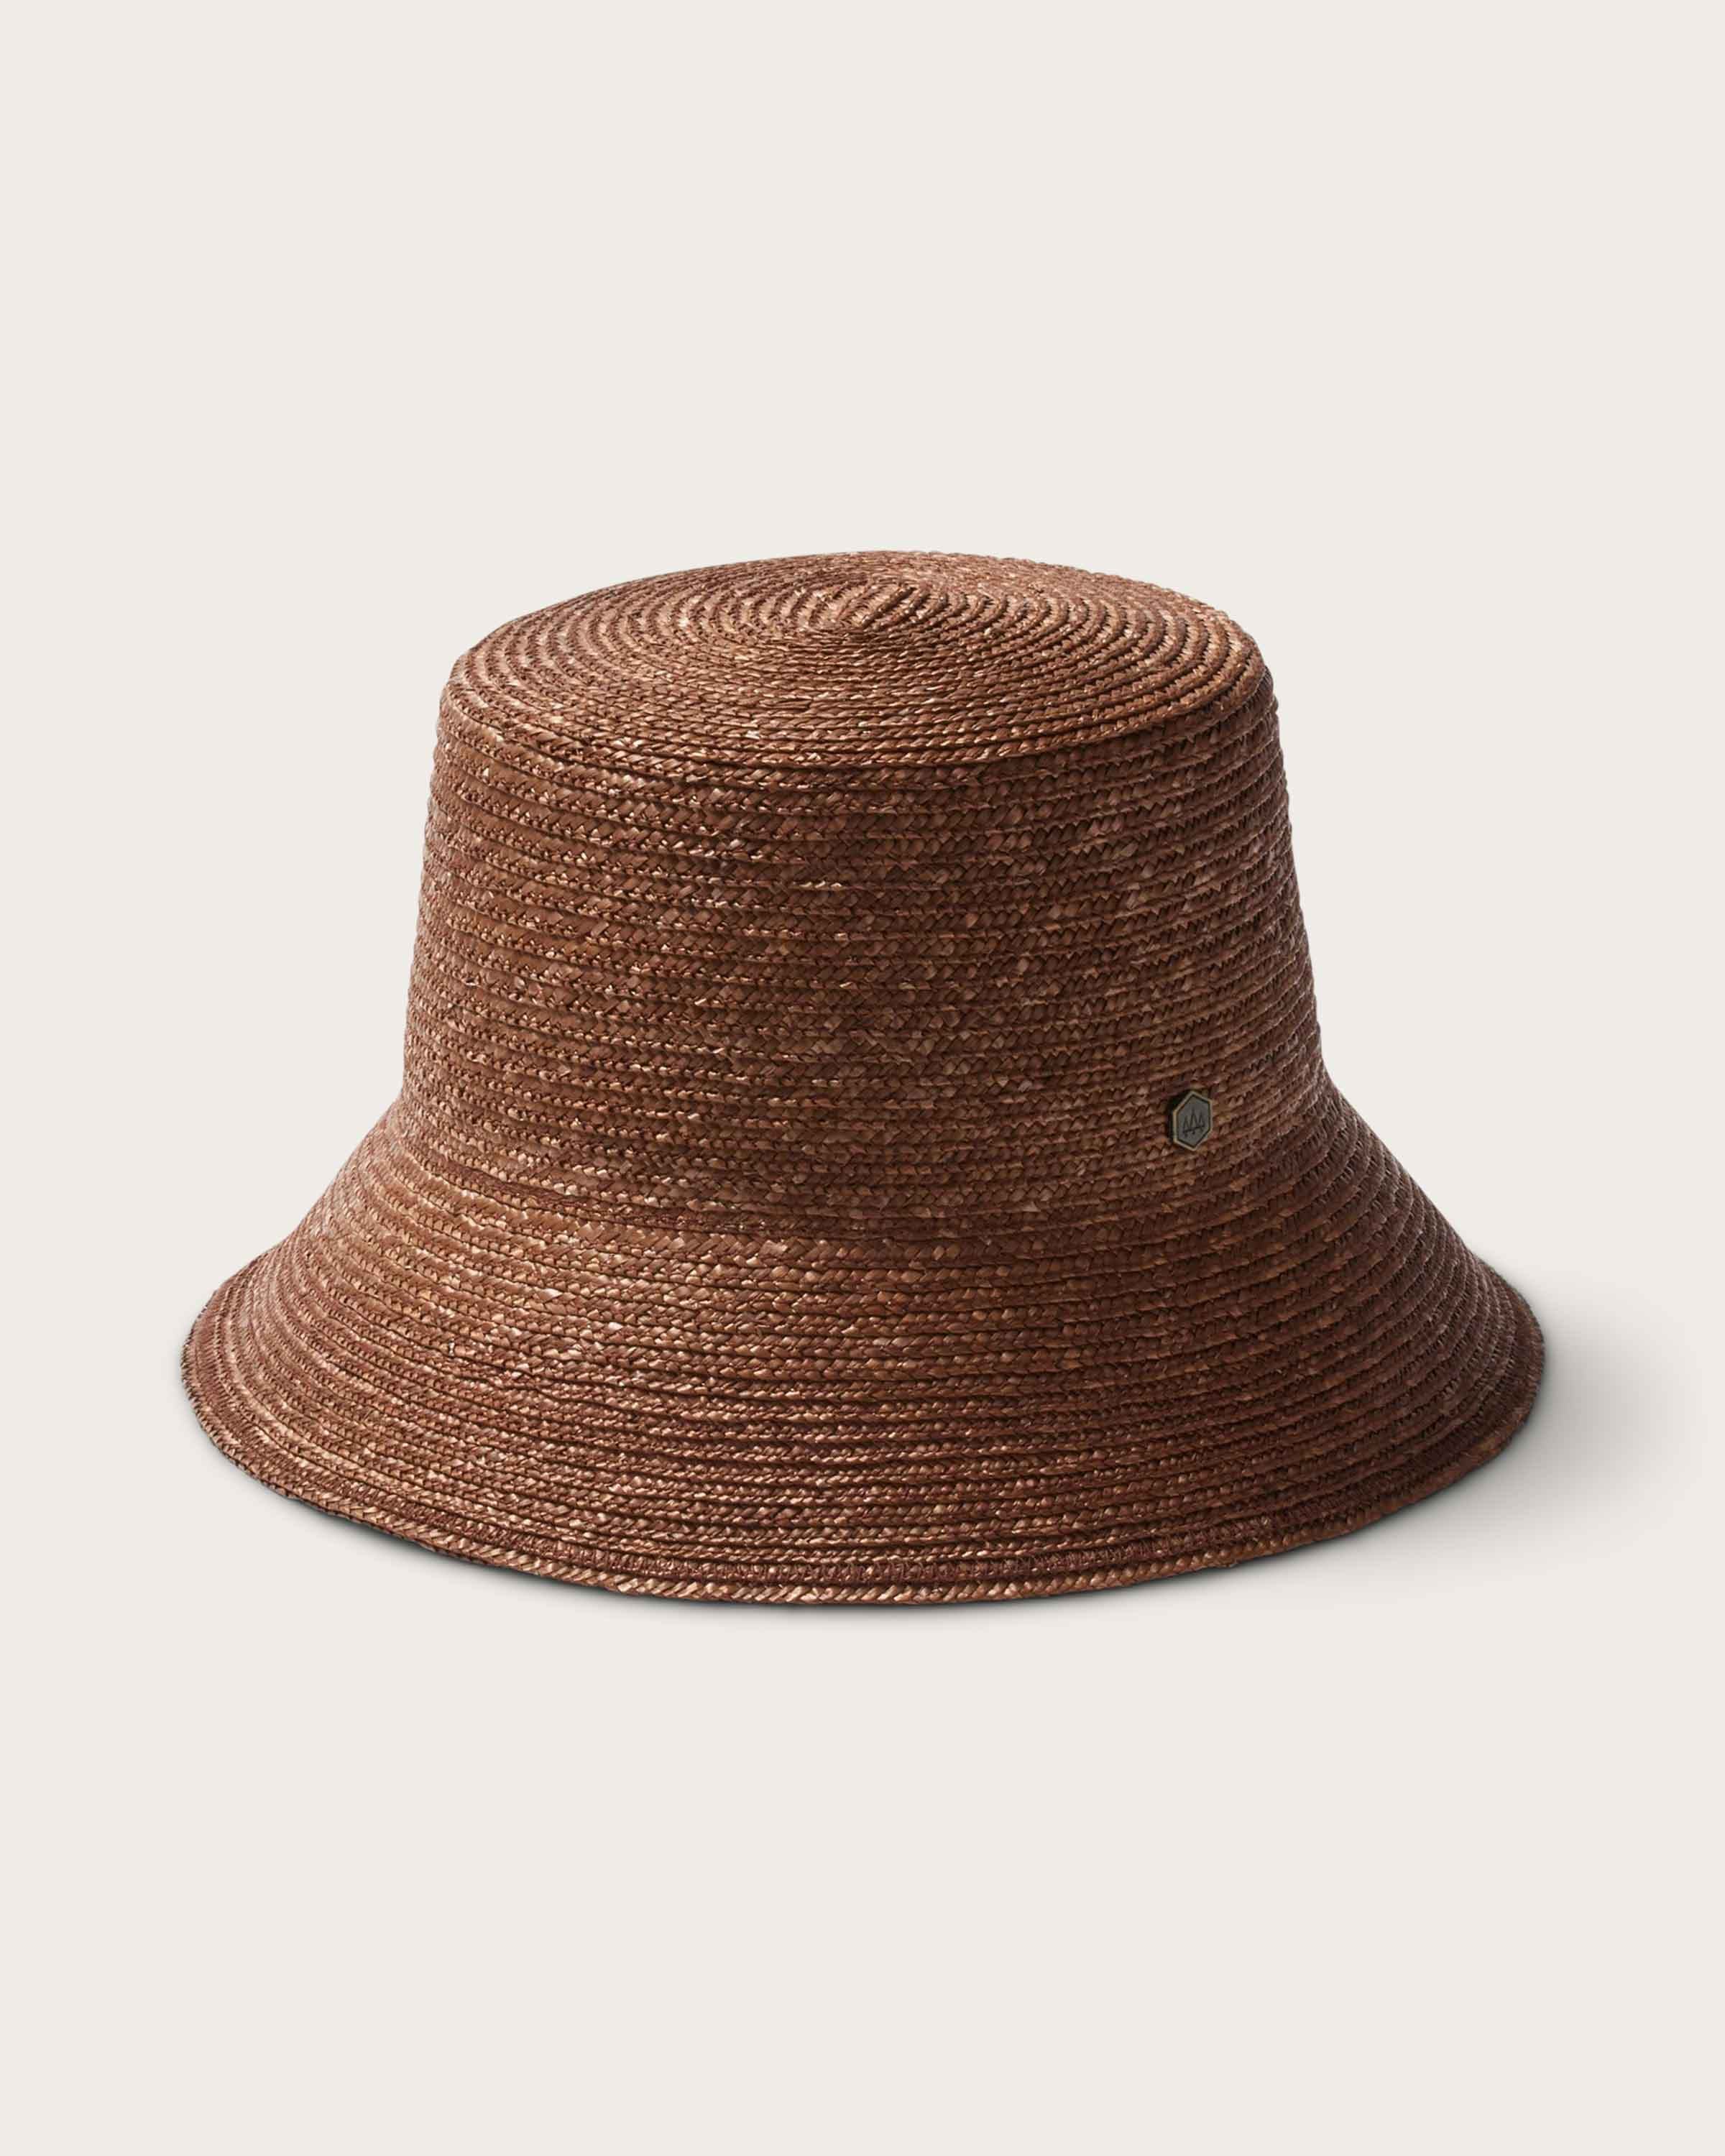 Audrey Bucket in Copper - undefined - Hemlock Hat Co. Straw Bucket Hats